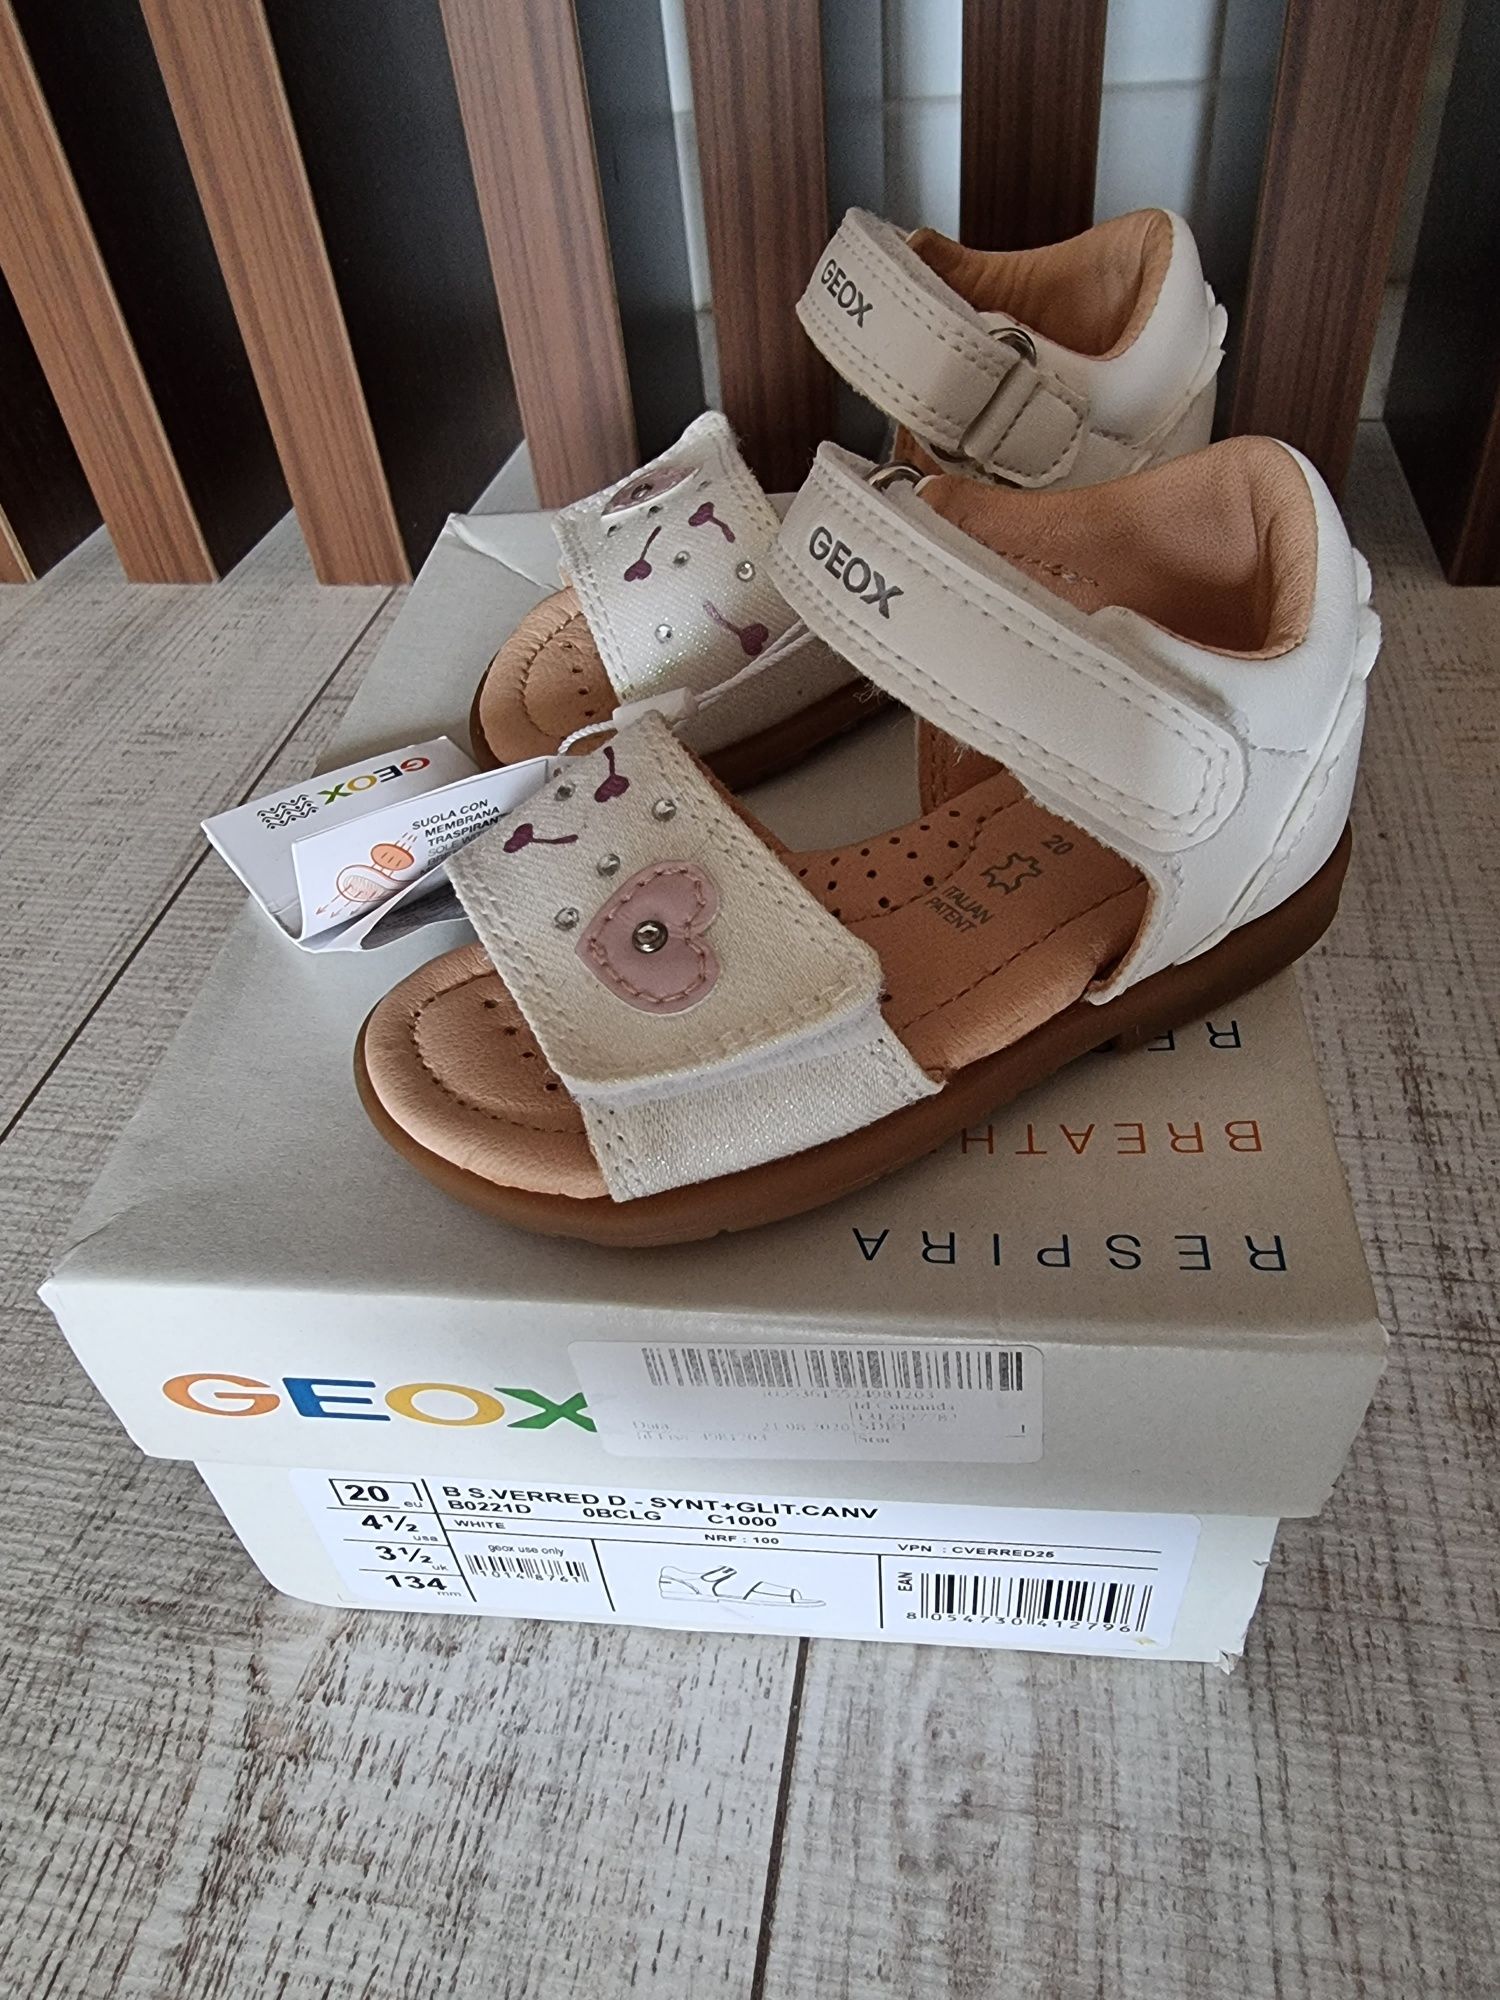 Sandale Geox 20 noi, cu eticheta